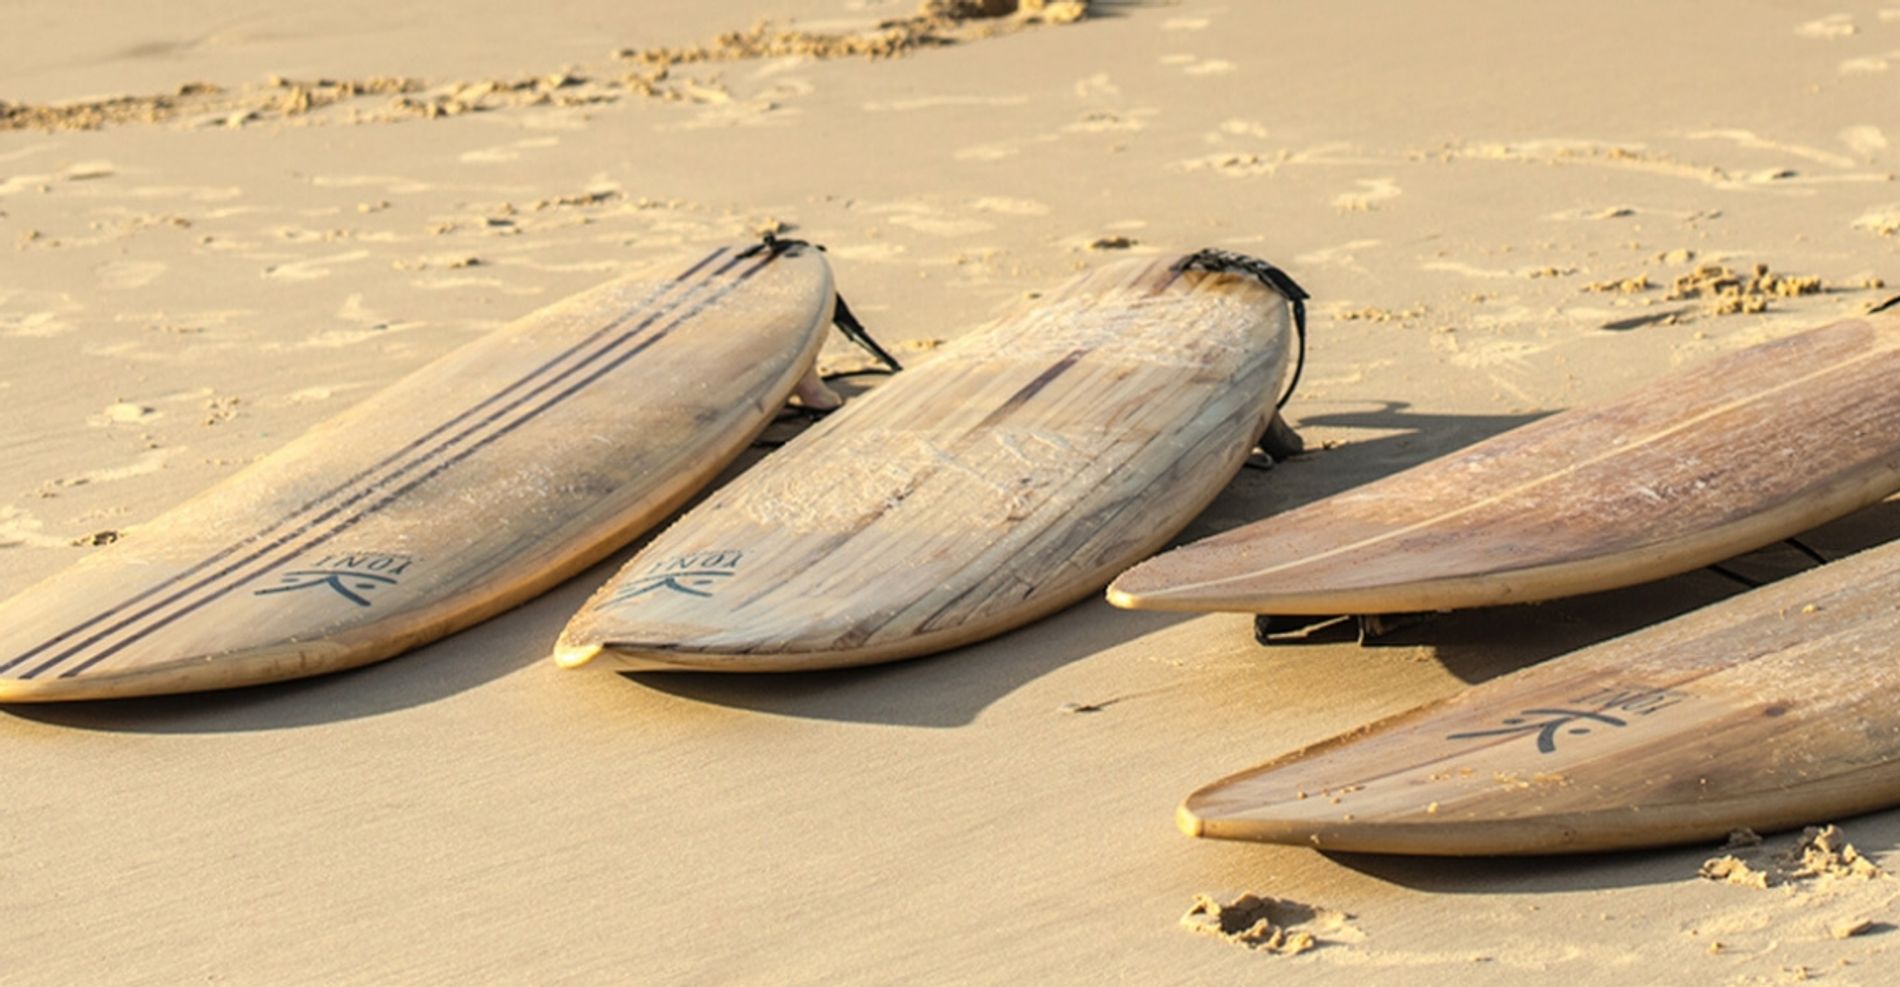 wooden surfboards' evolution